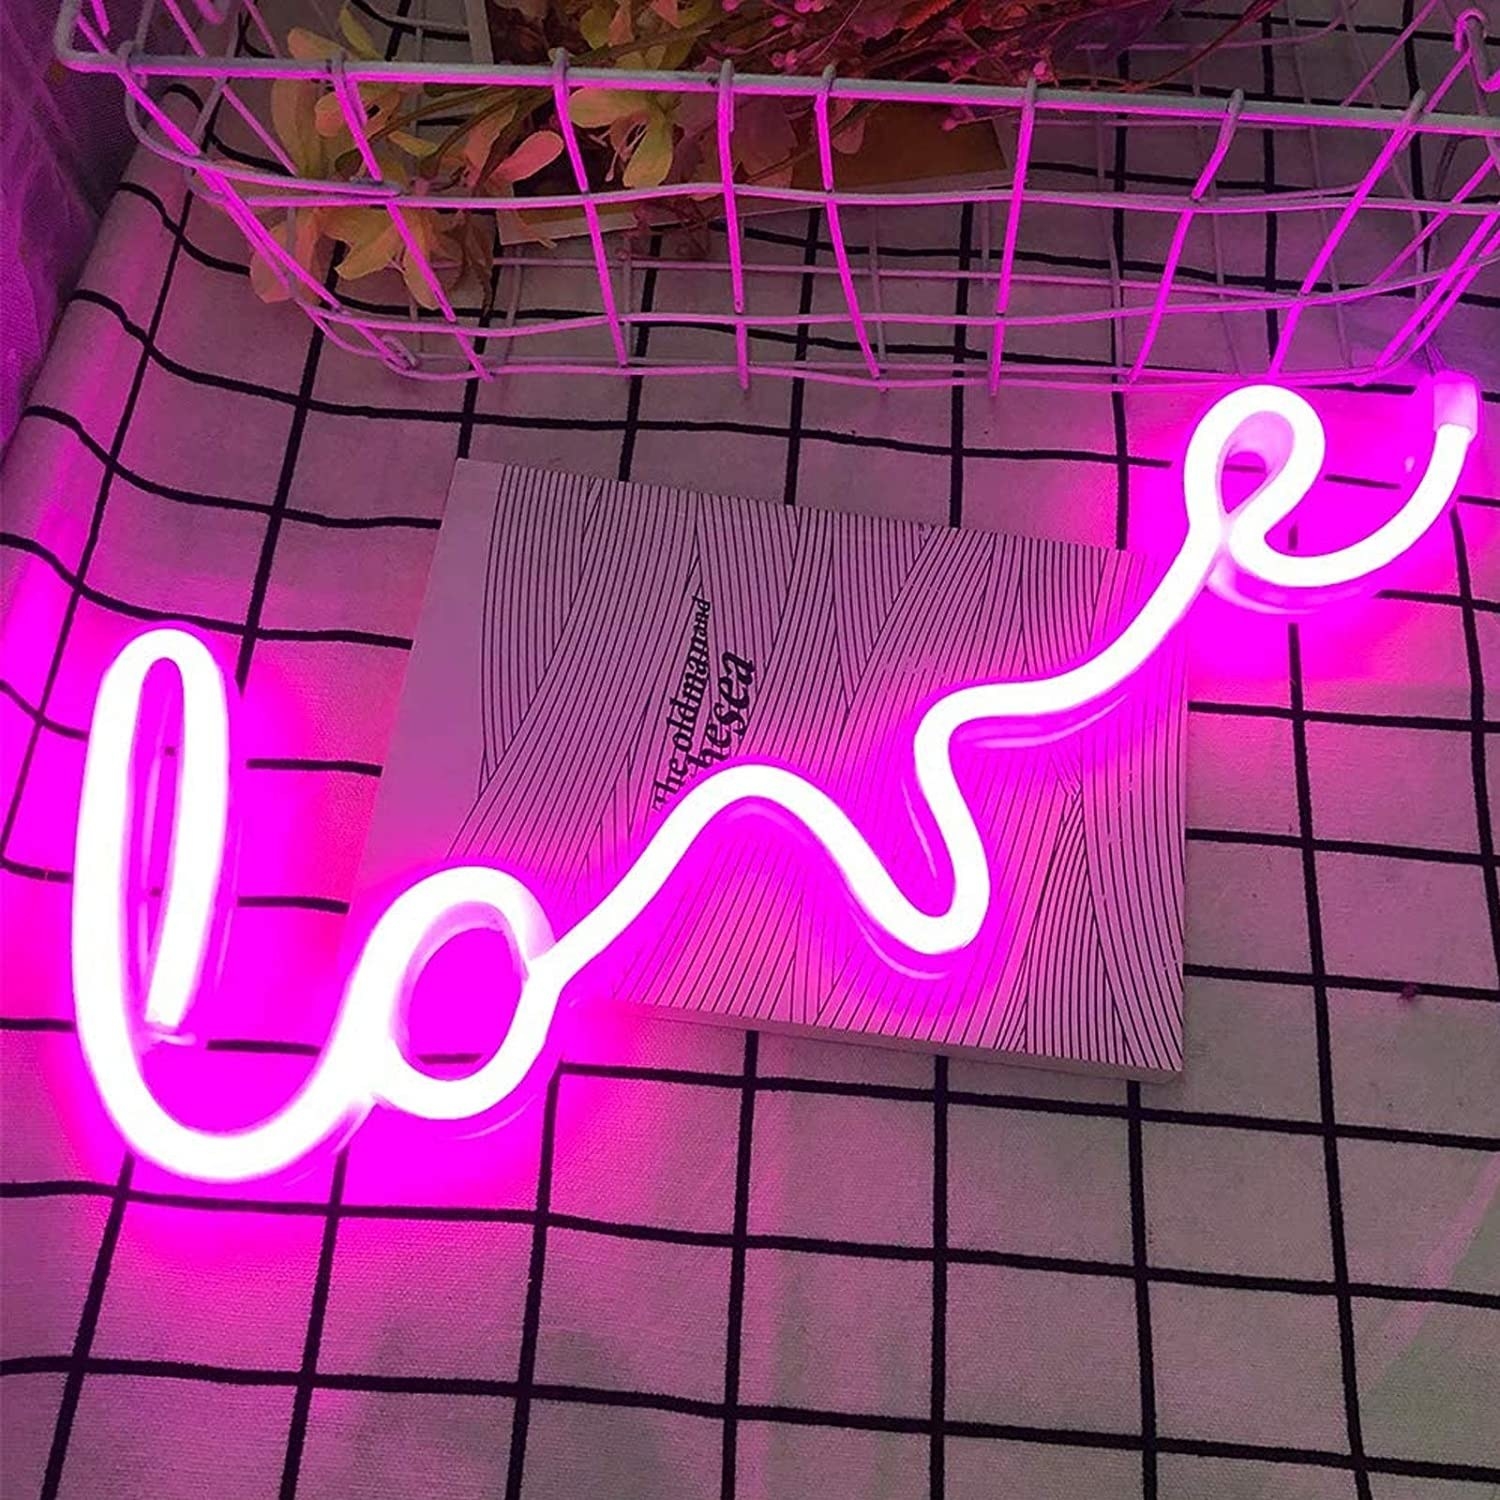 Neon light that says &quot;love&quot; in cursive 